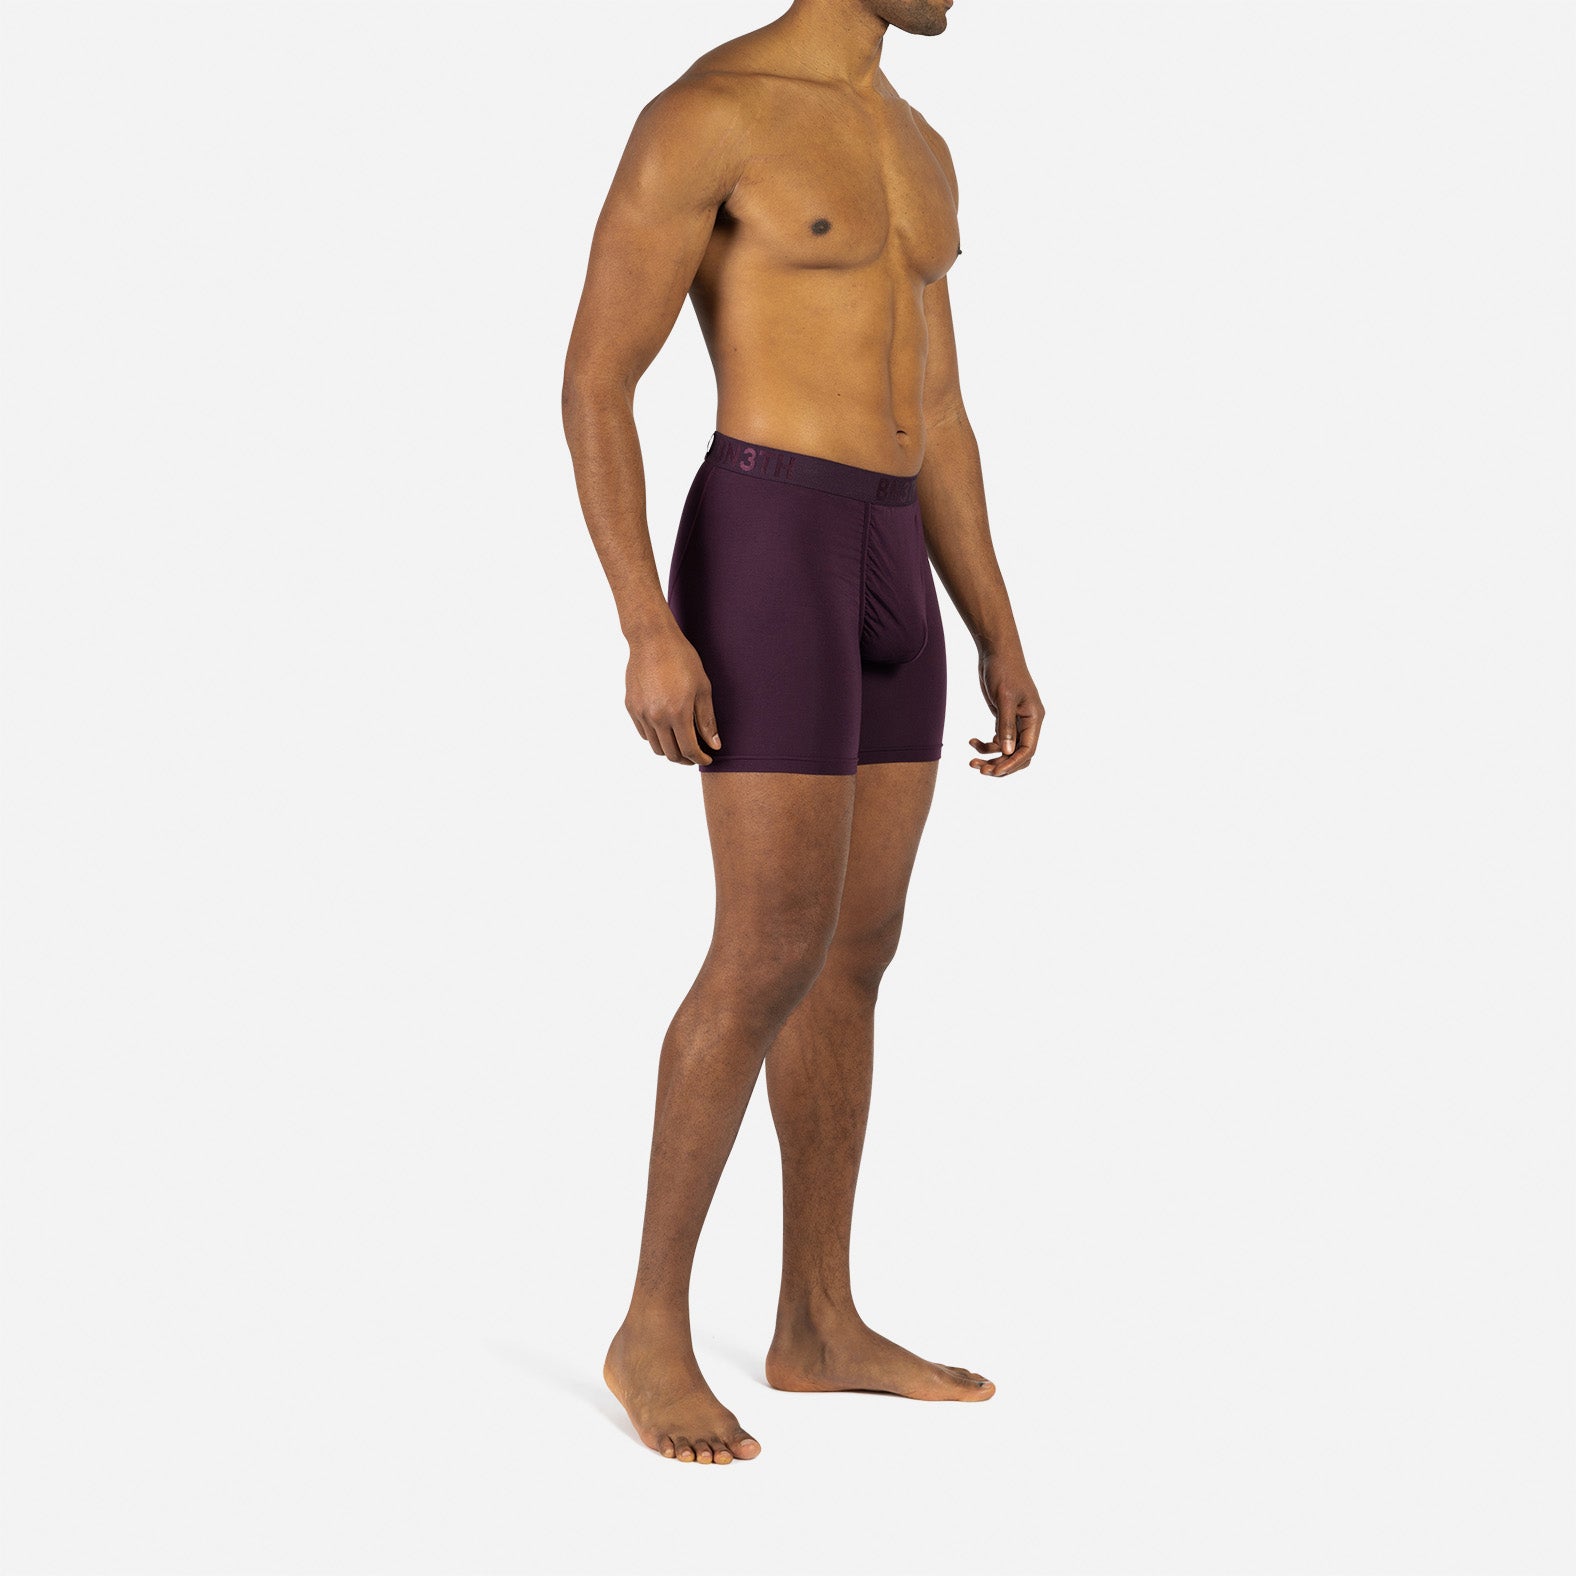 Men's Pouch Underwear CASCADE Classic-boxer-brief BN3TH Cascade • Price »